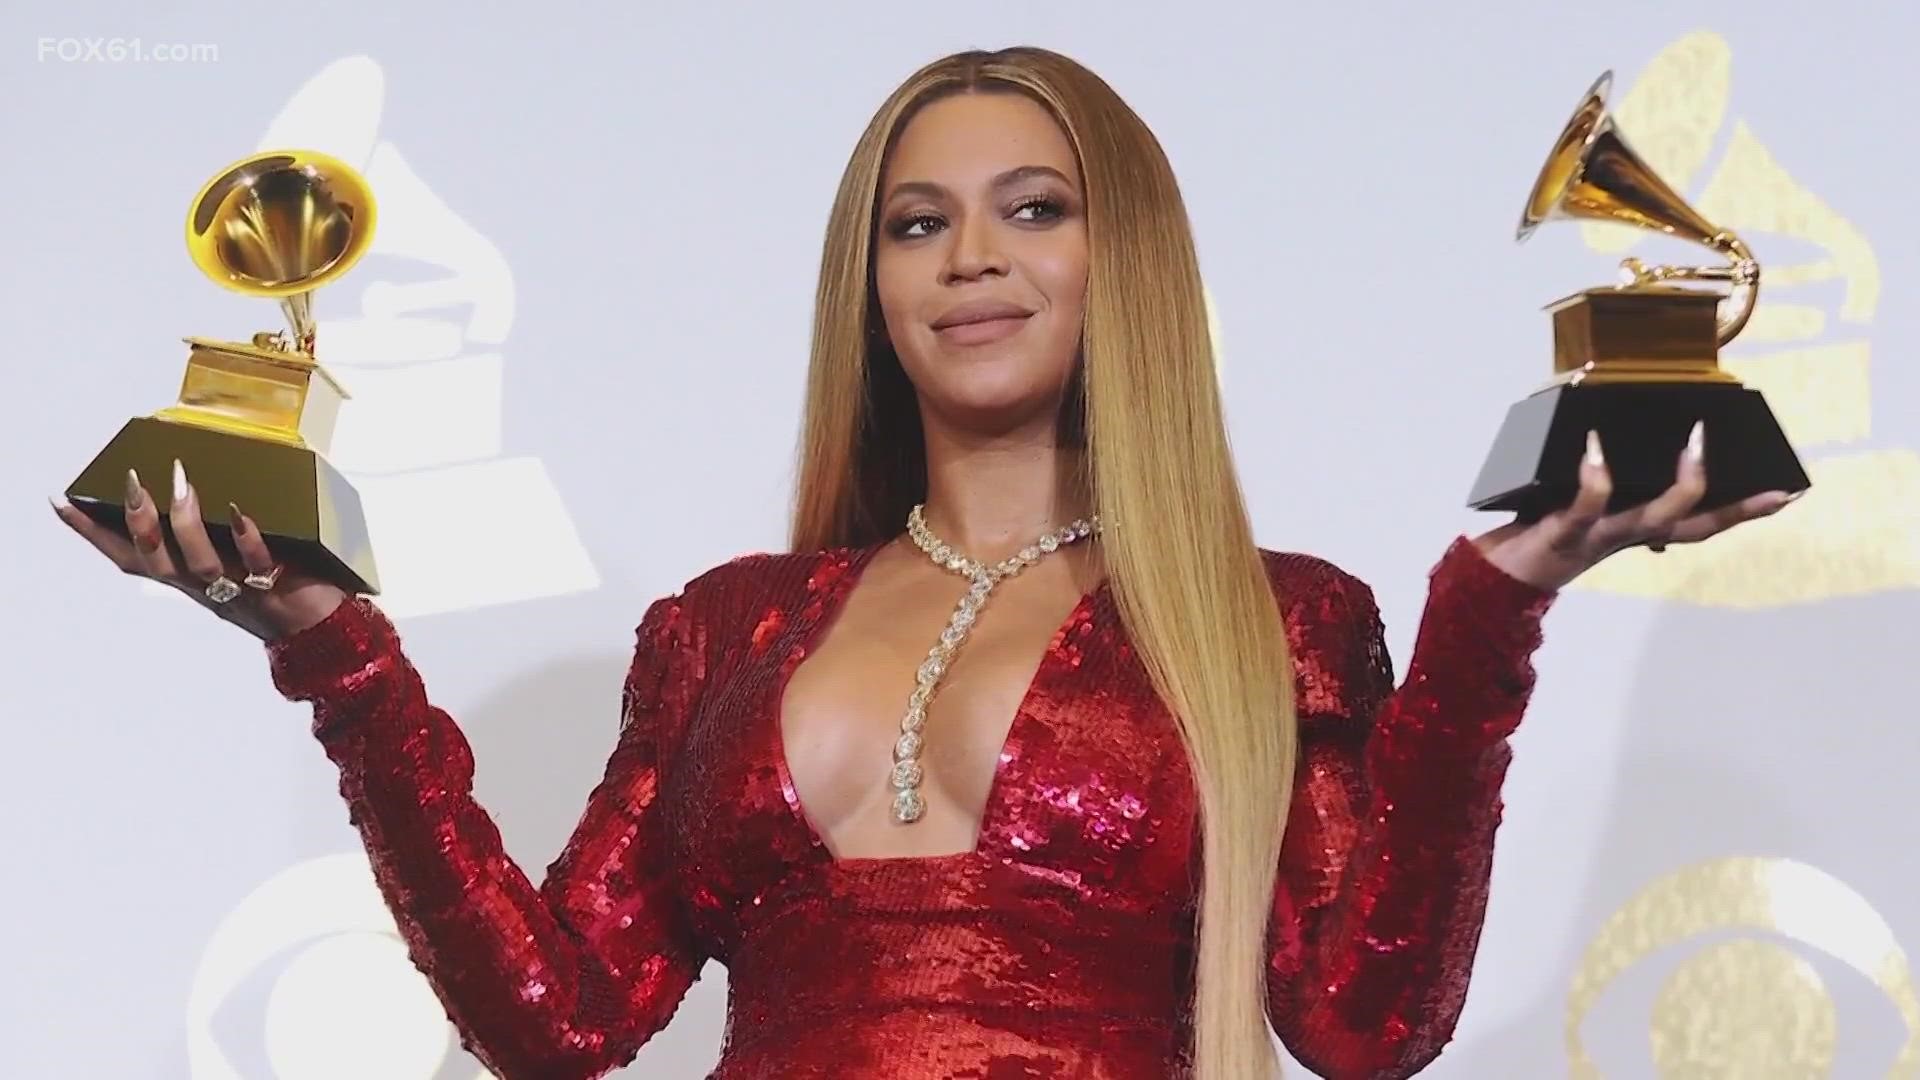 Beyonce just announced a world tour for her Renaissance album.